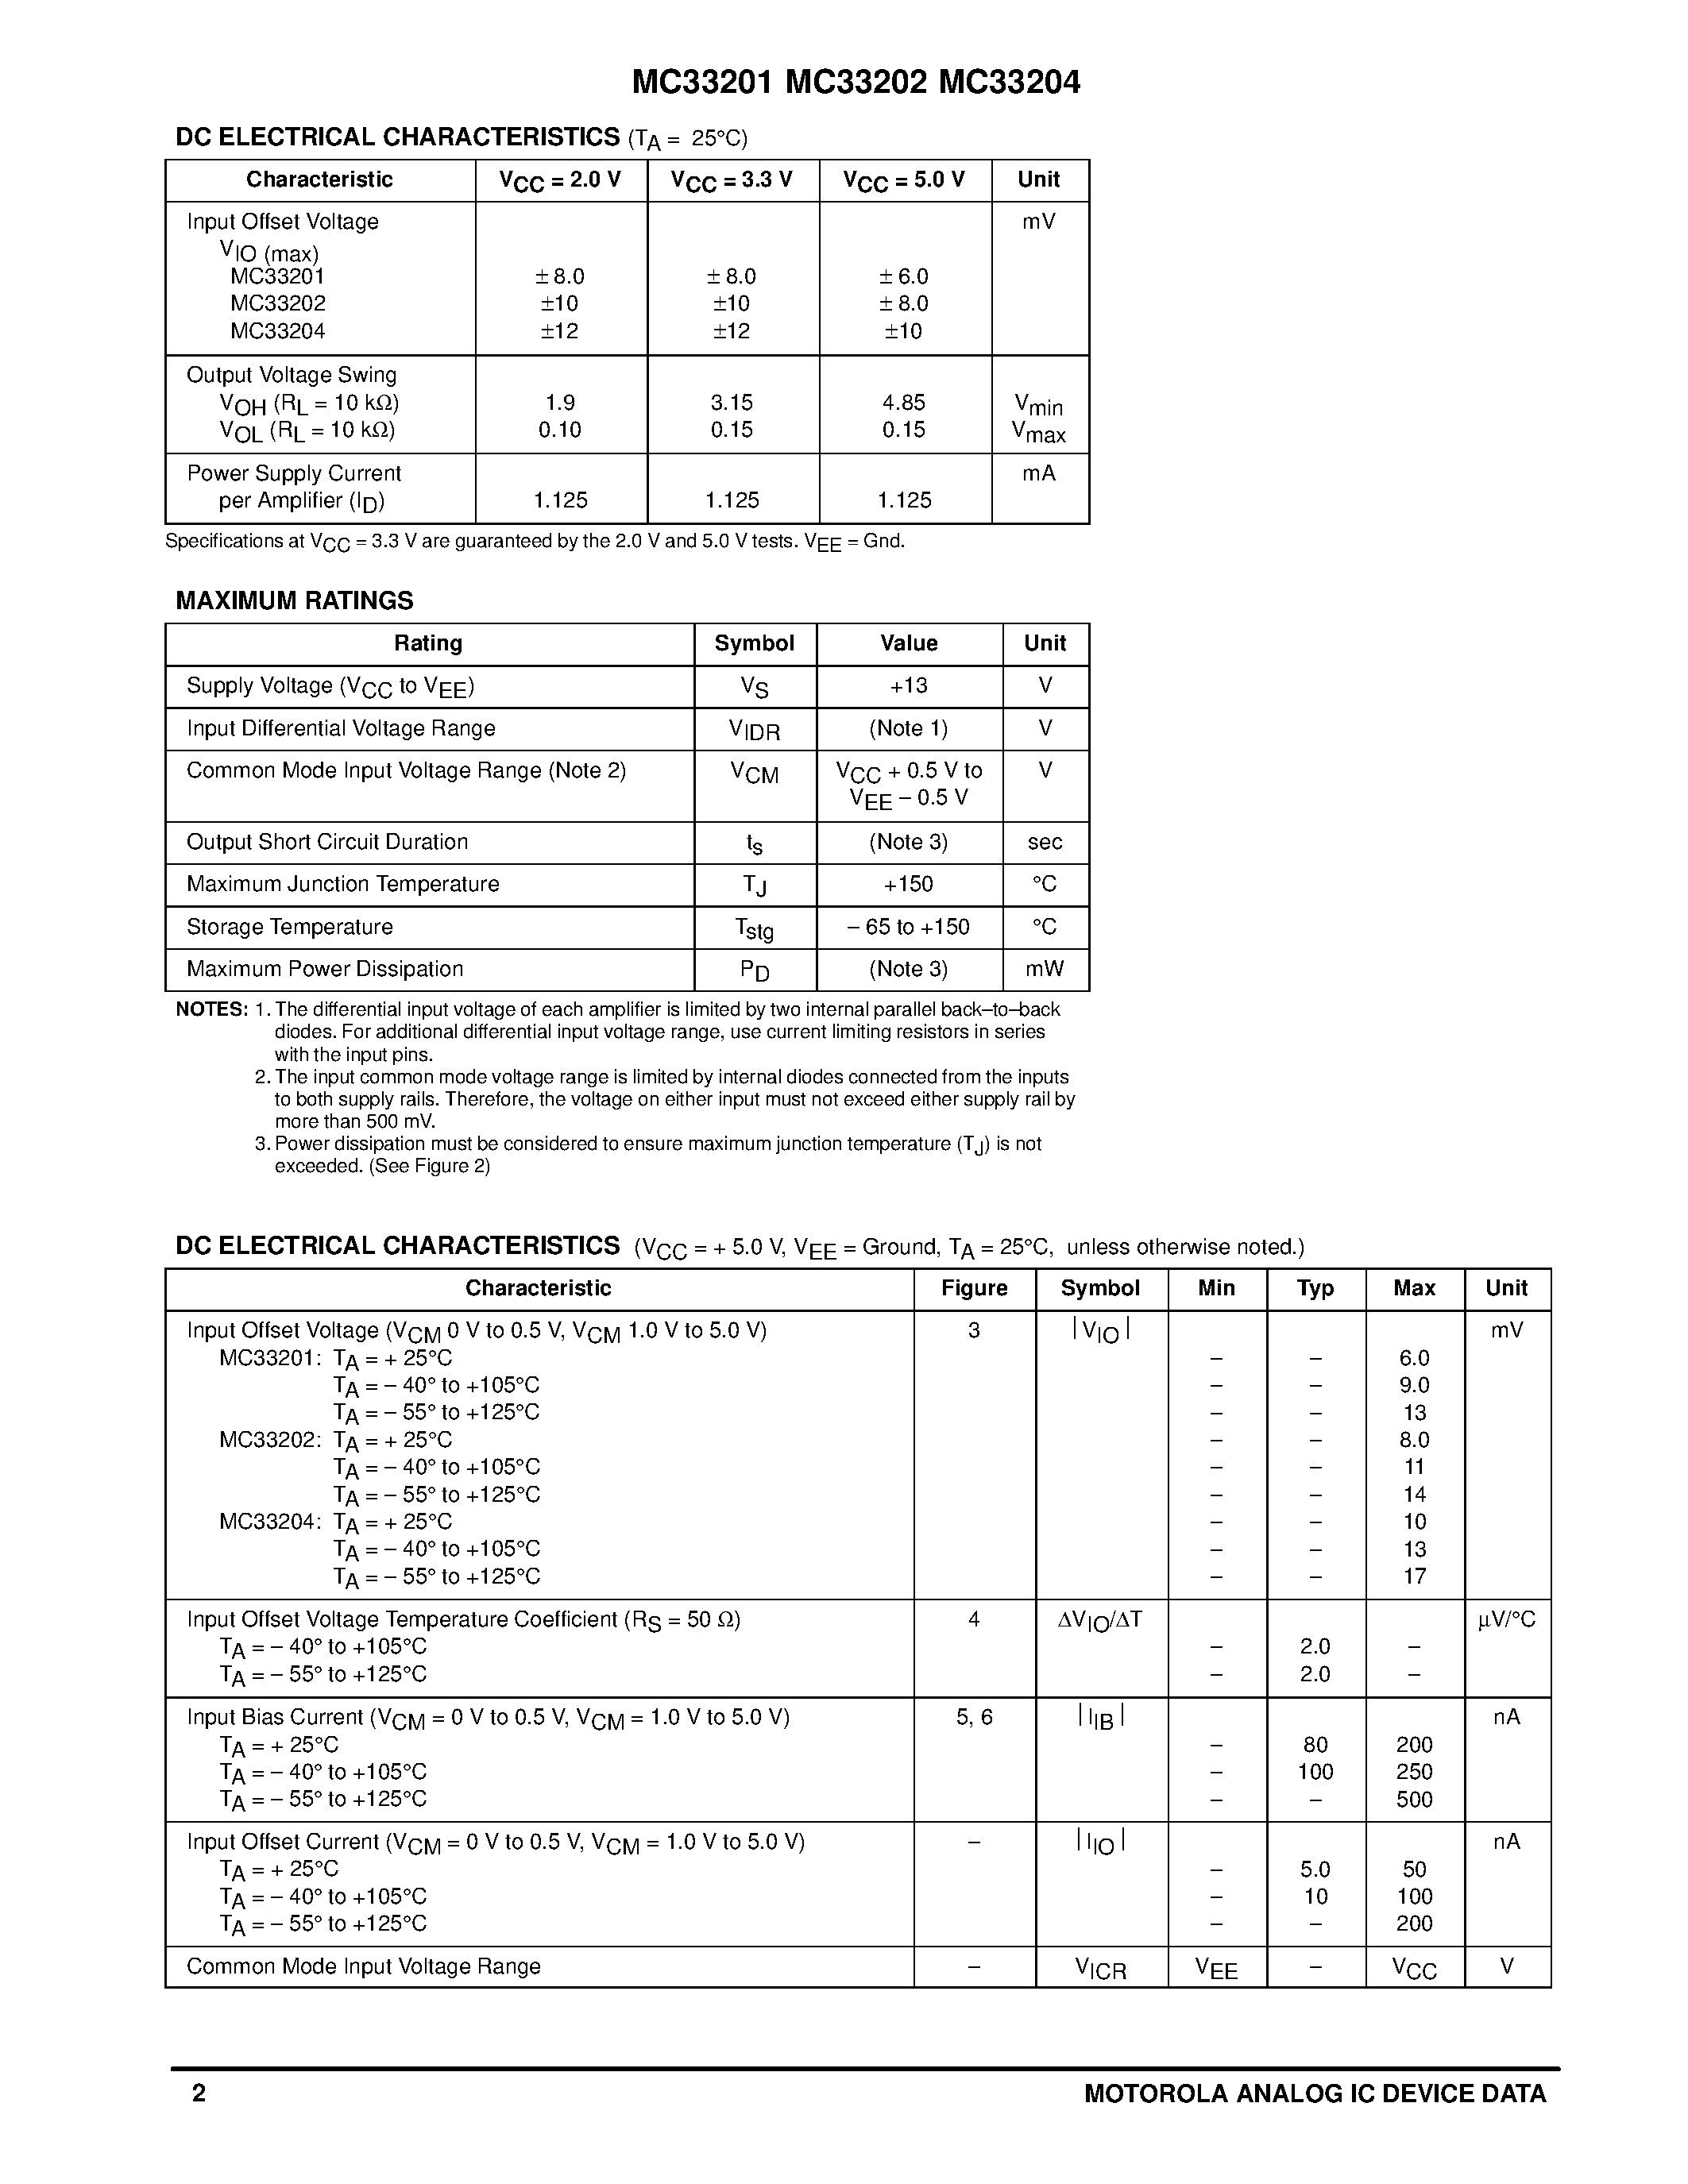 Datasheet MC33201 - (MC33201 - MC33204) Amplifiers and Comparators page 2